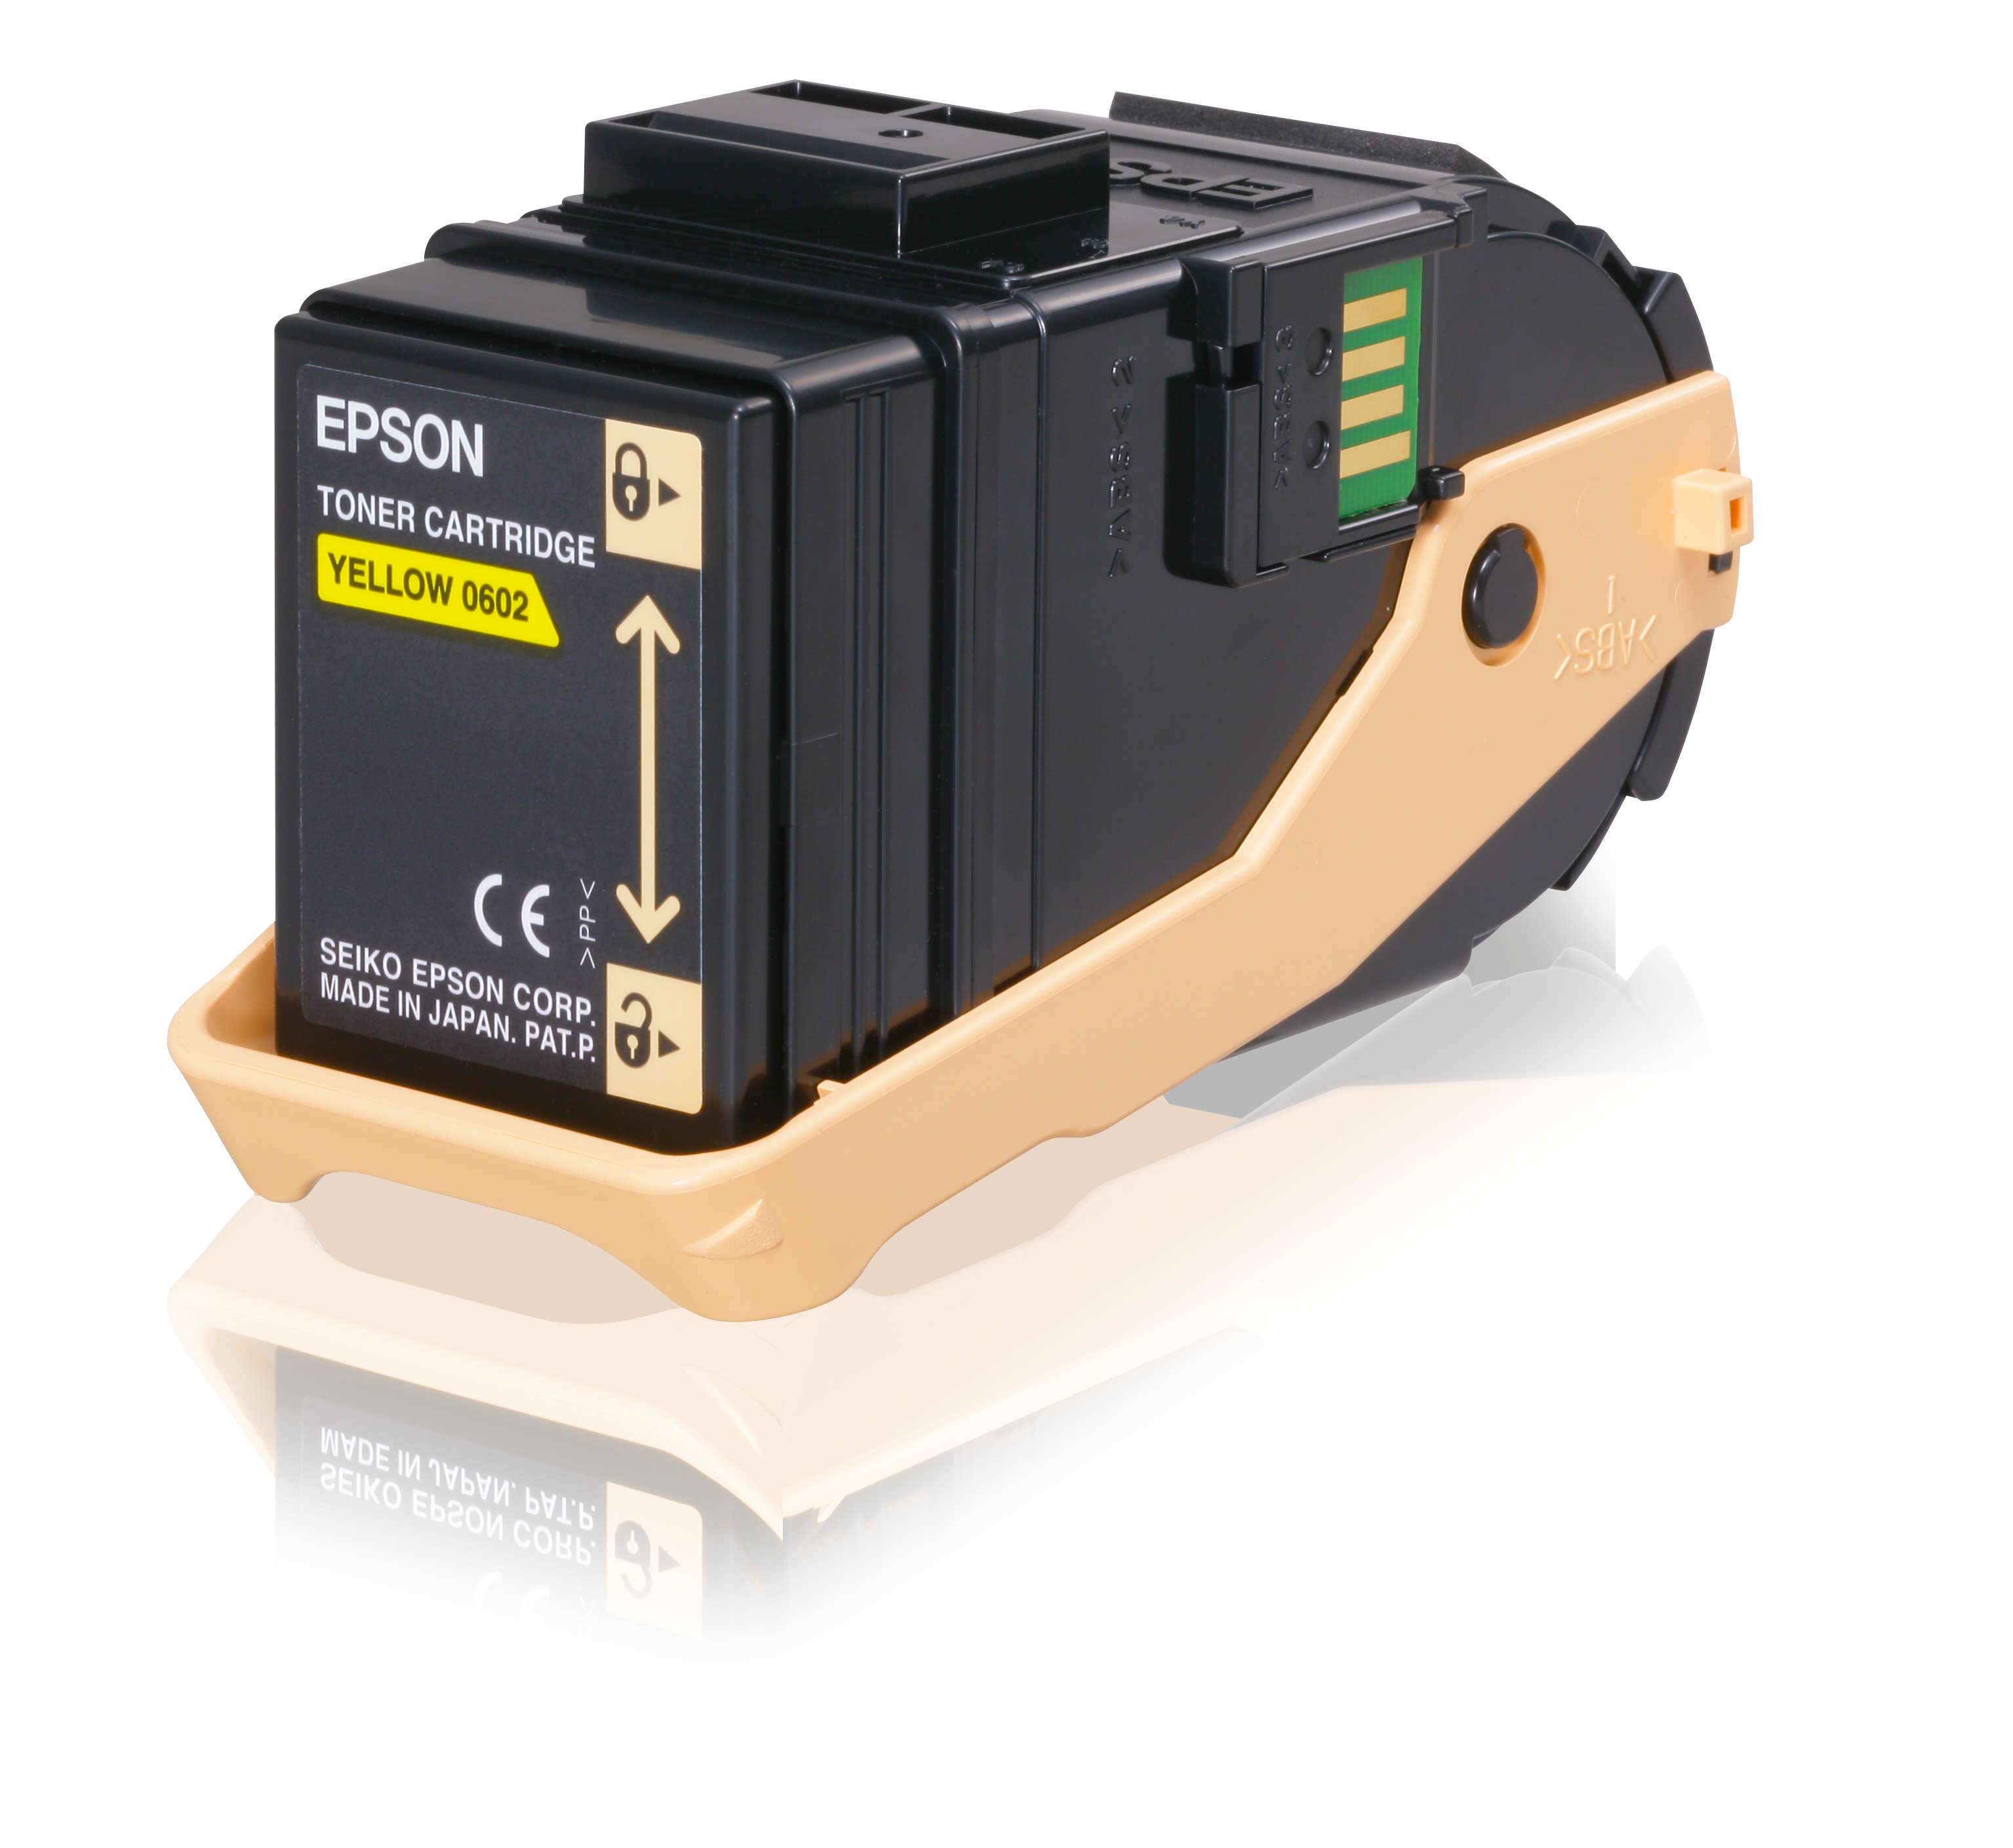 Epson Toner Cartridge Yellow, 7.5k